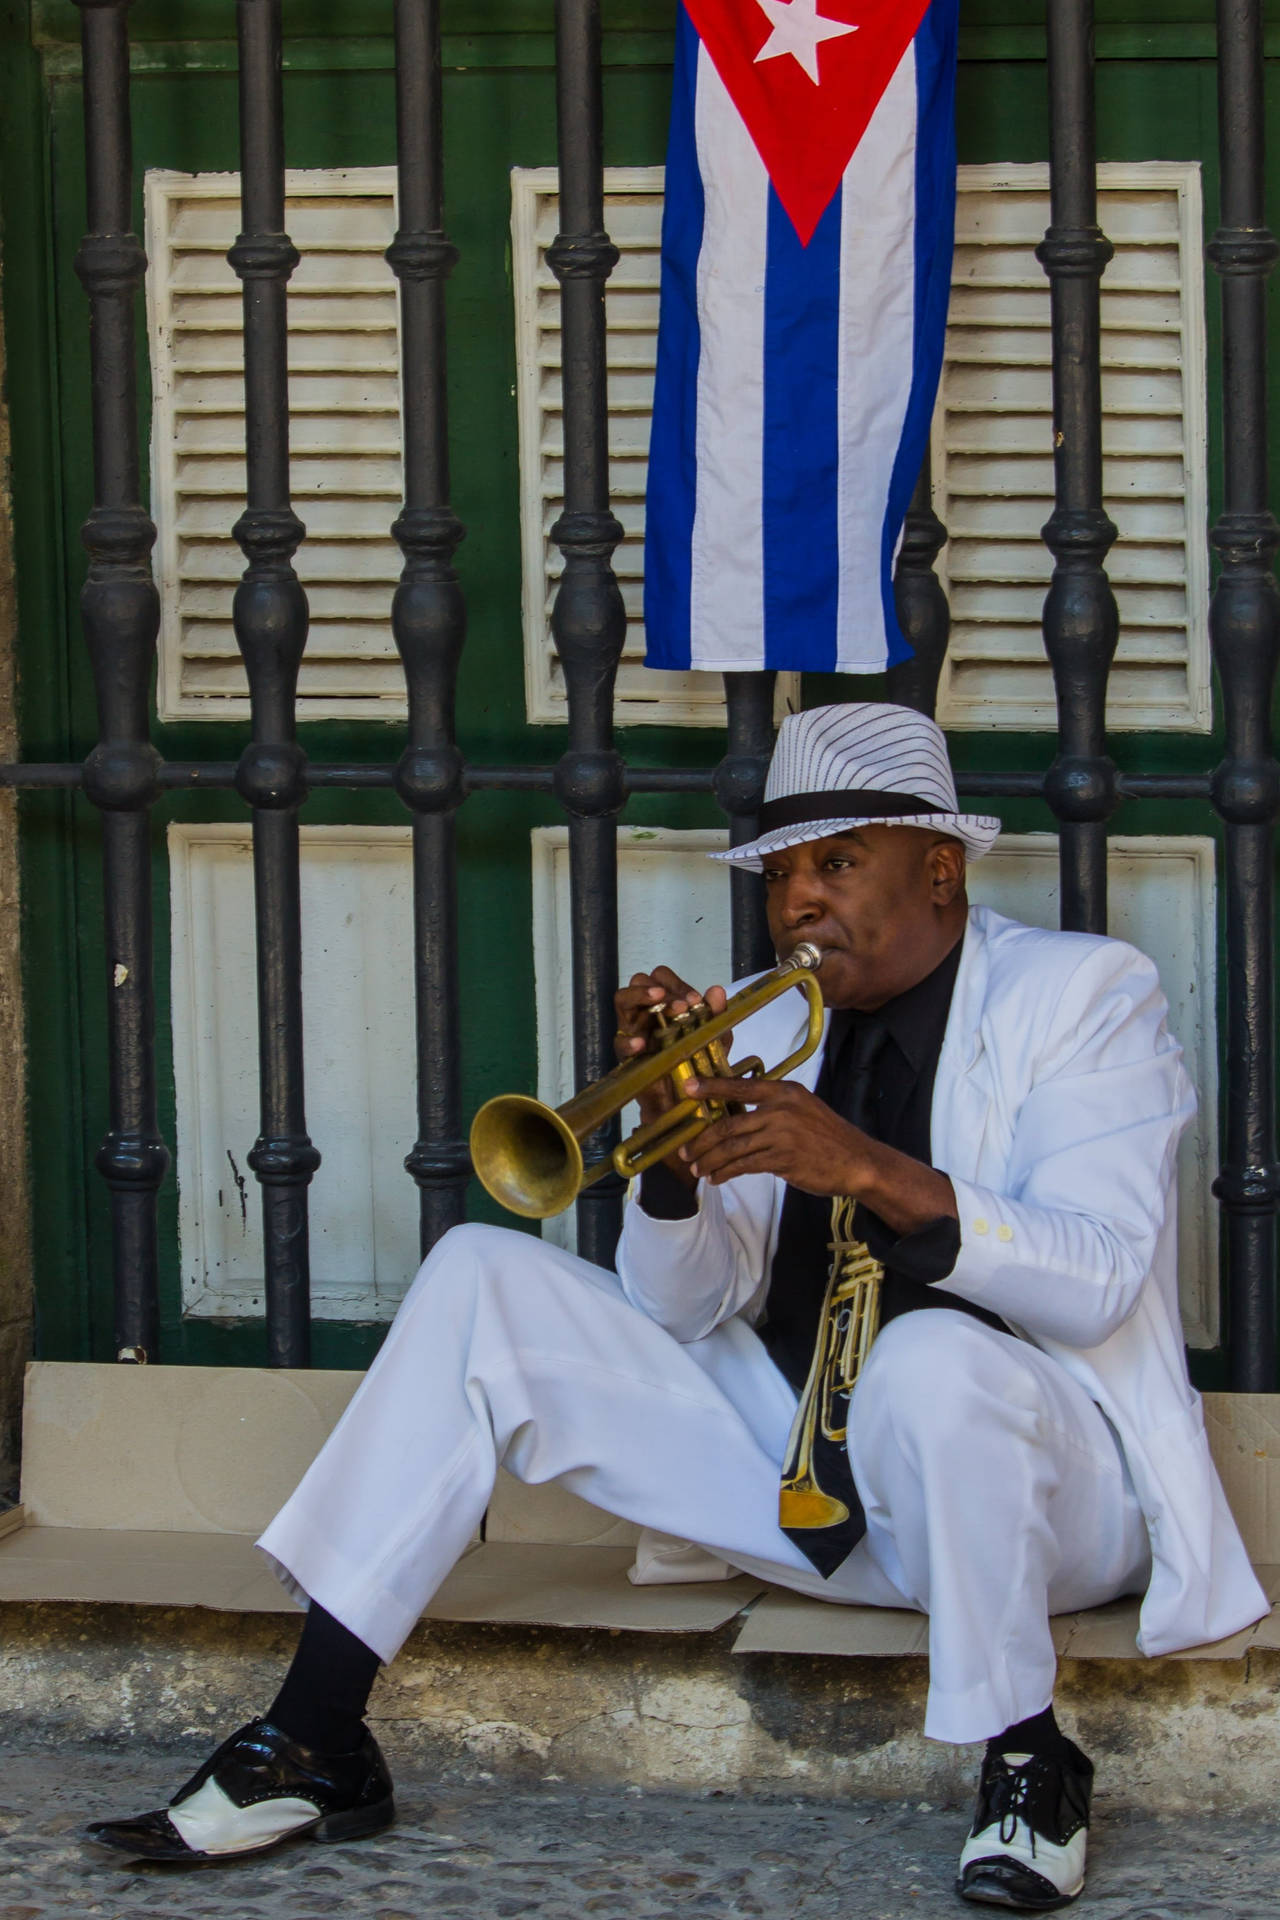 Cuban Flag Above Trumpet Player